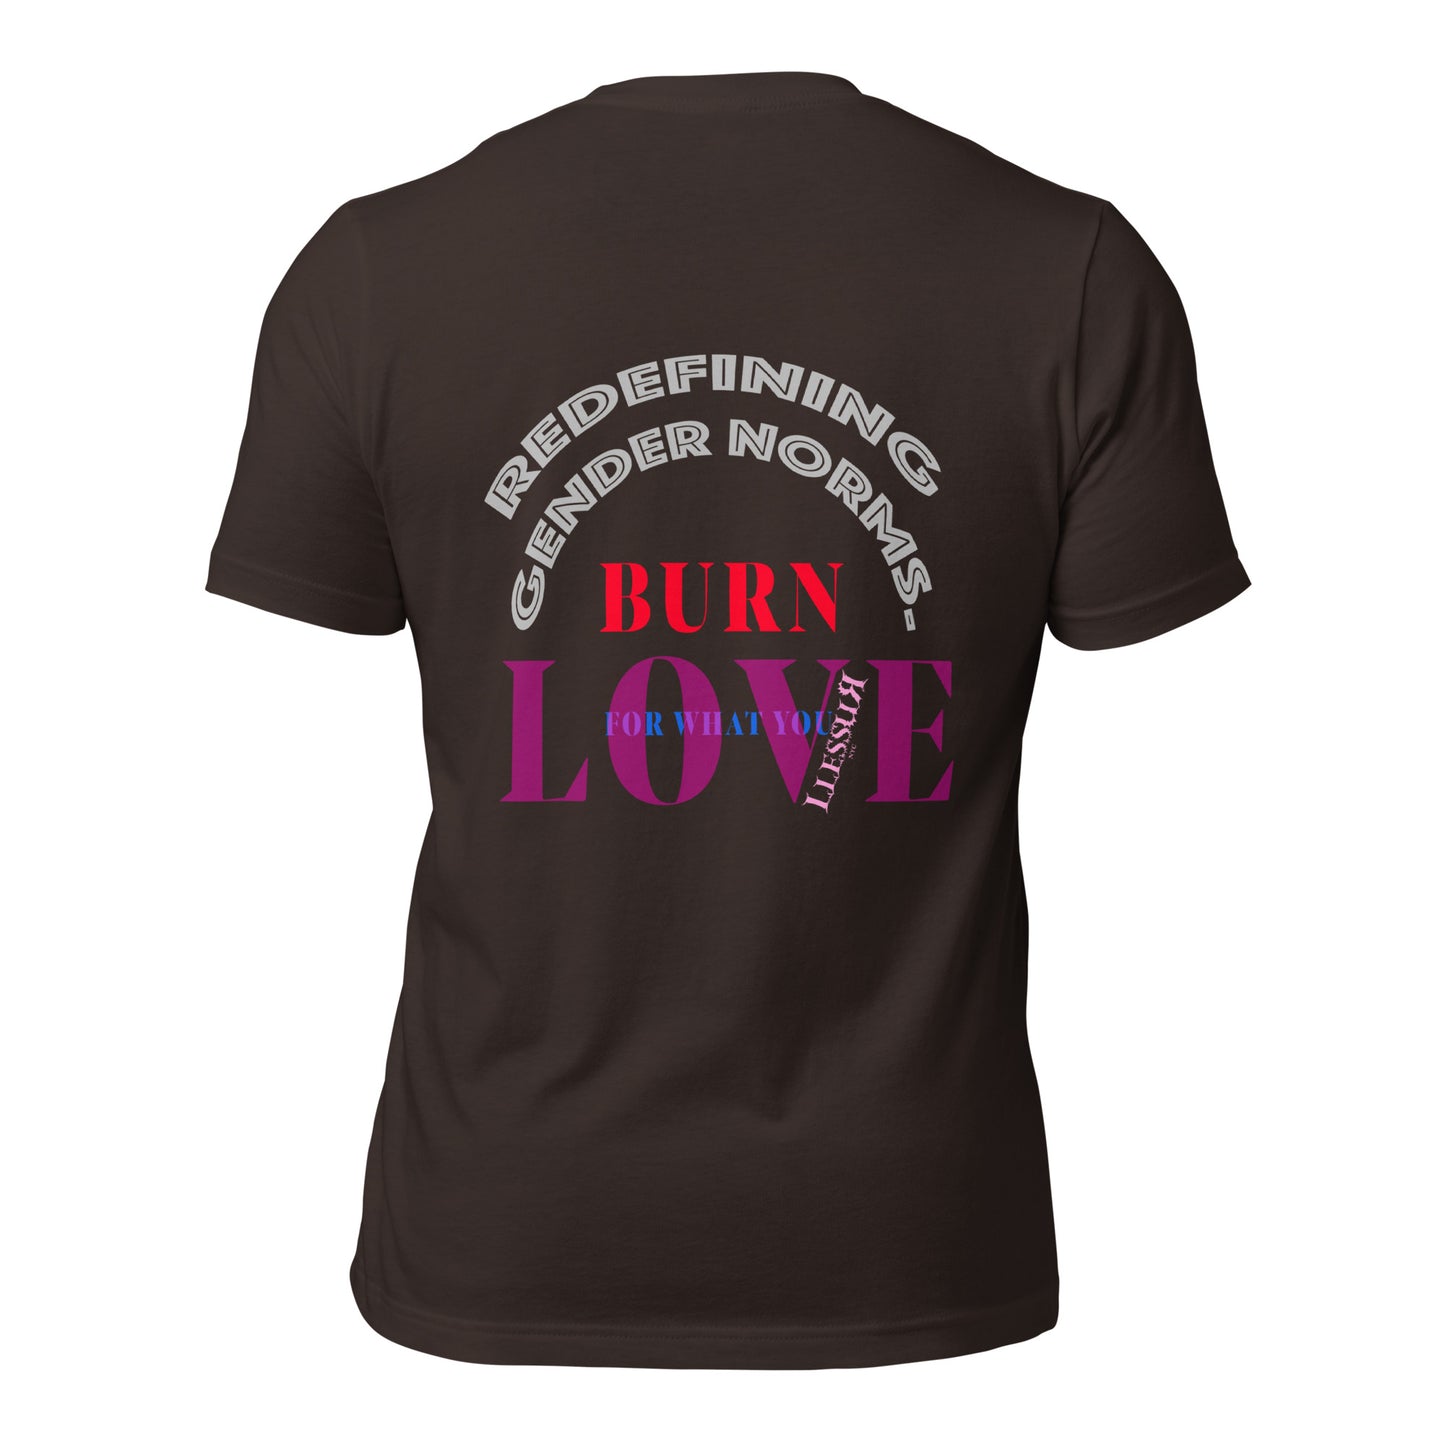 Unisex Graphic T-shirt Burn Love LLESSUR NYC